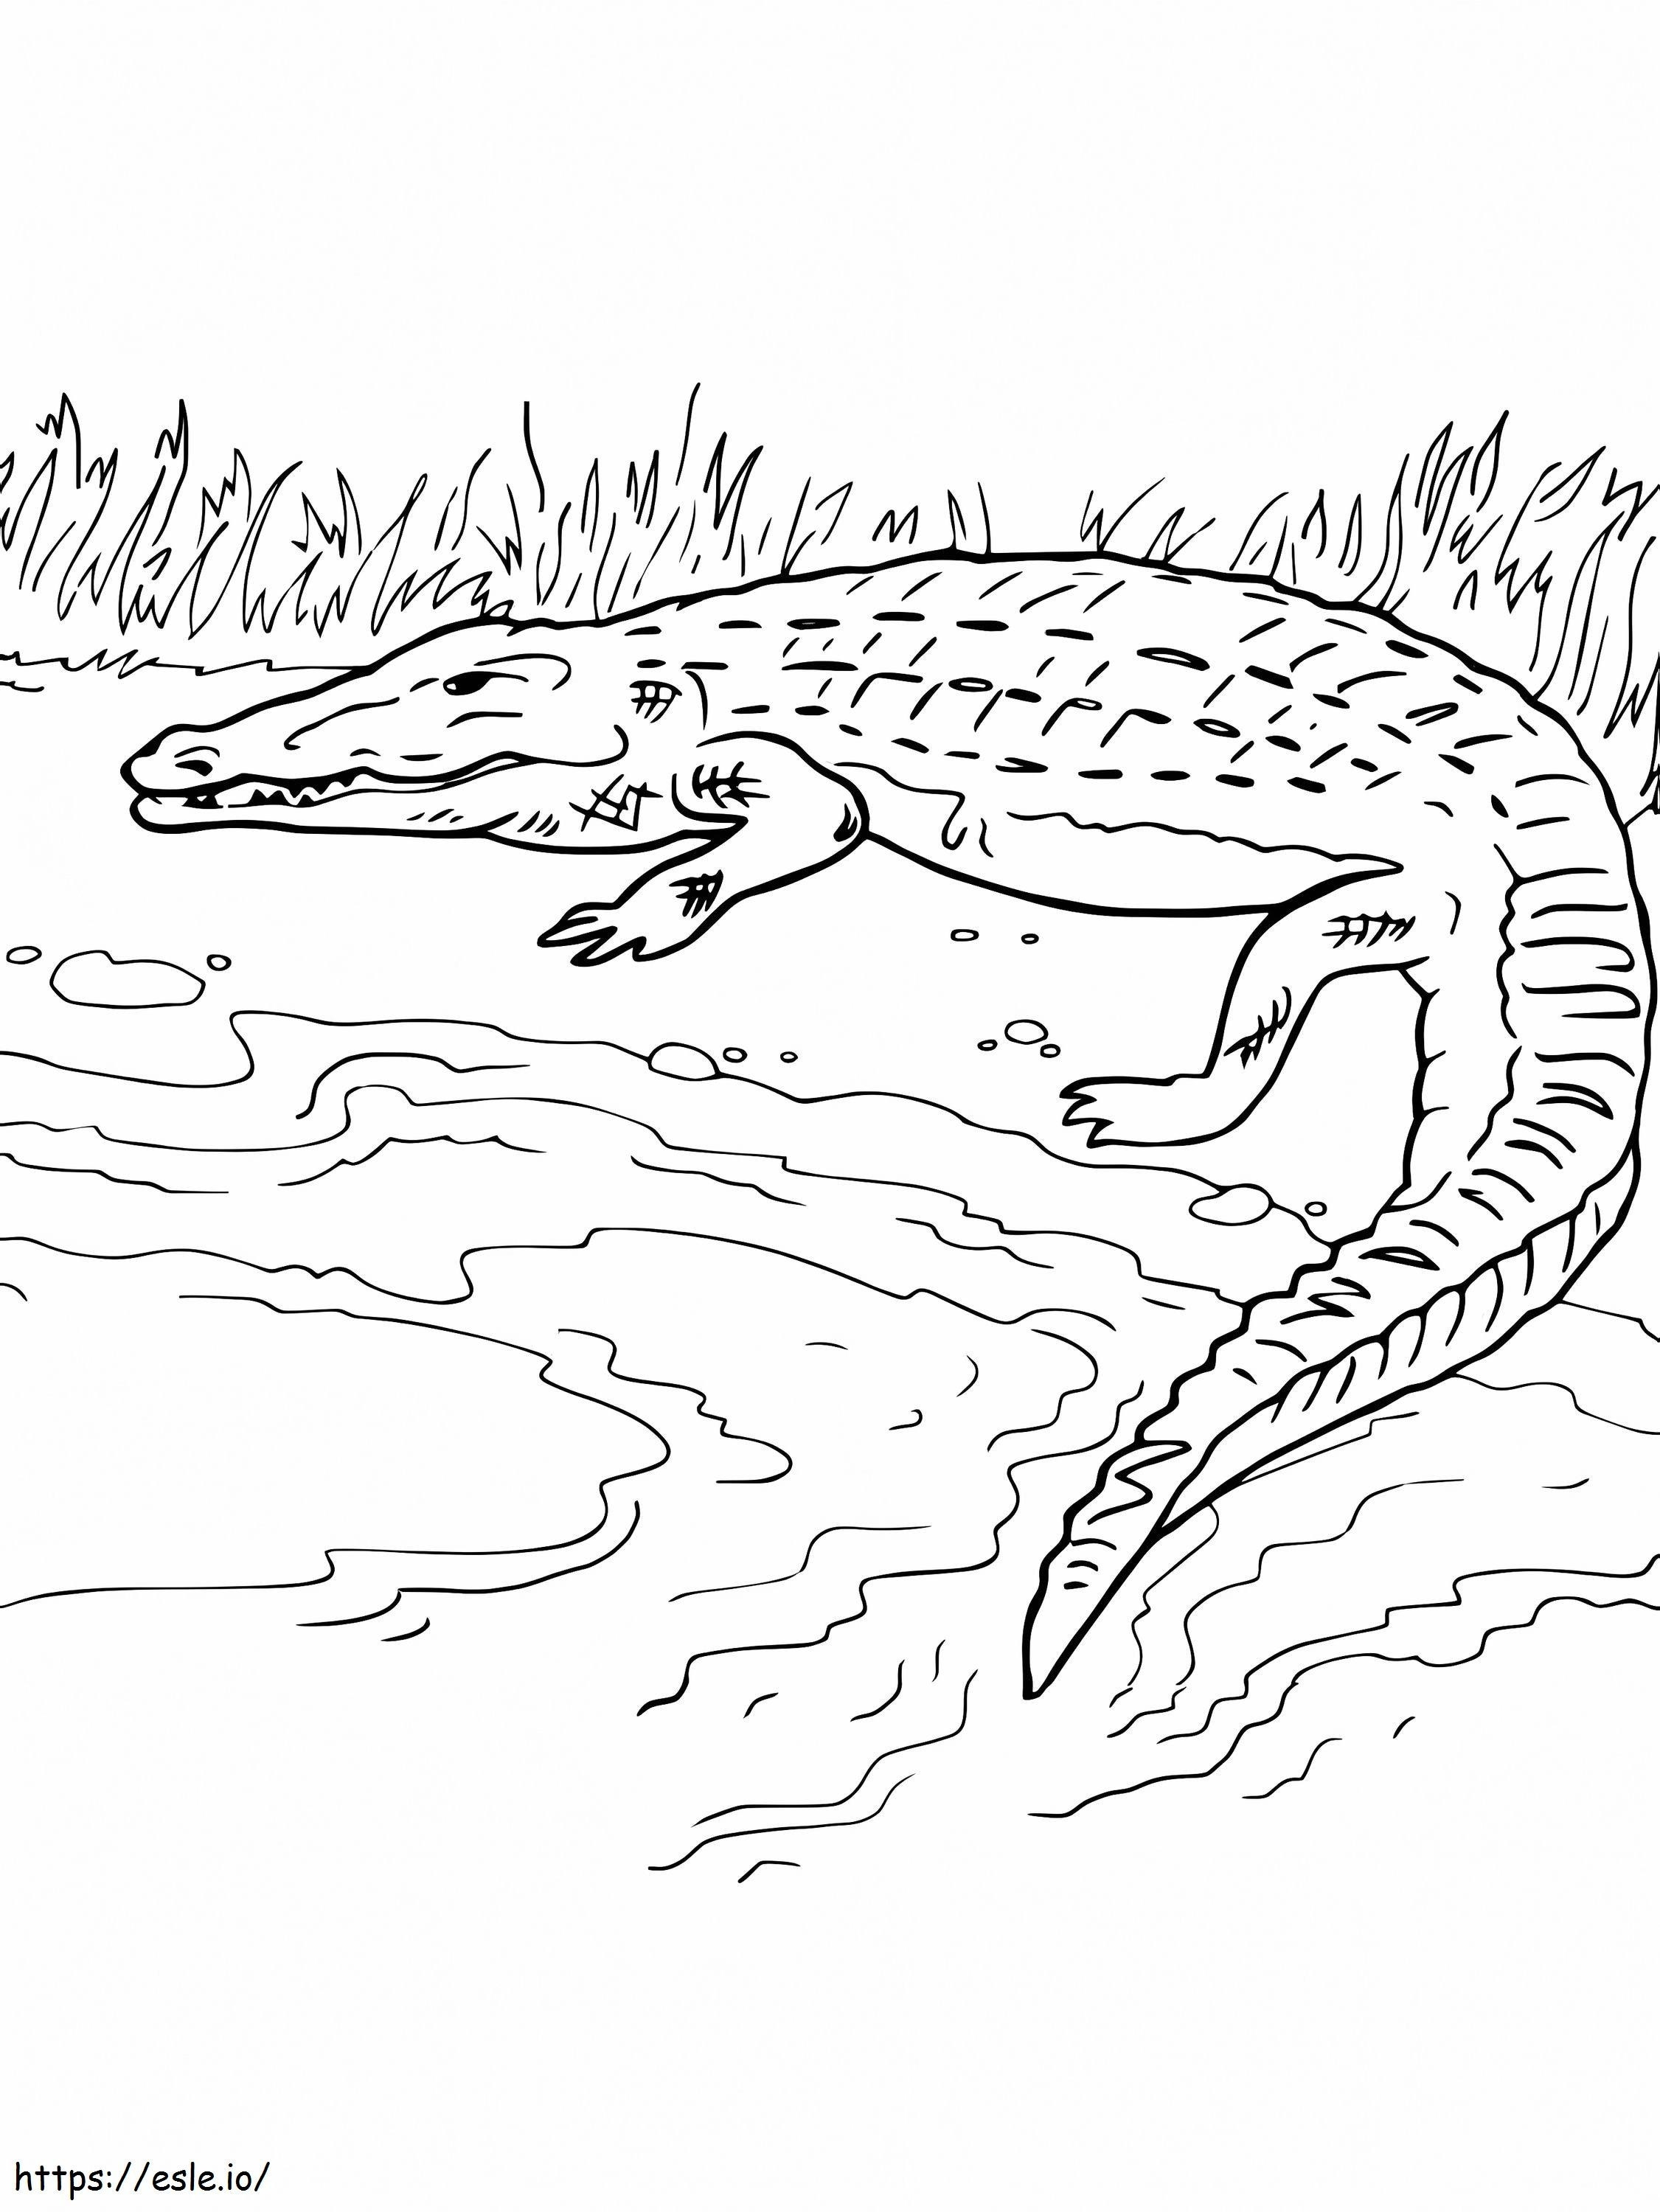 Krokodil am Ufer ausmalbilder